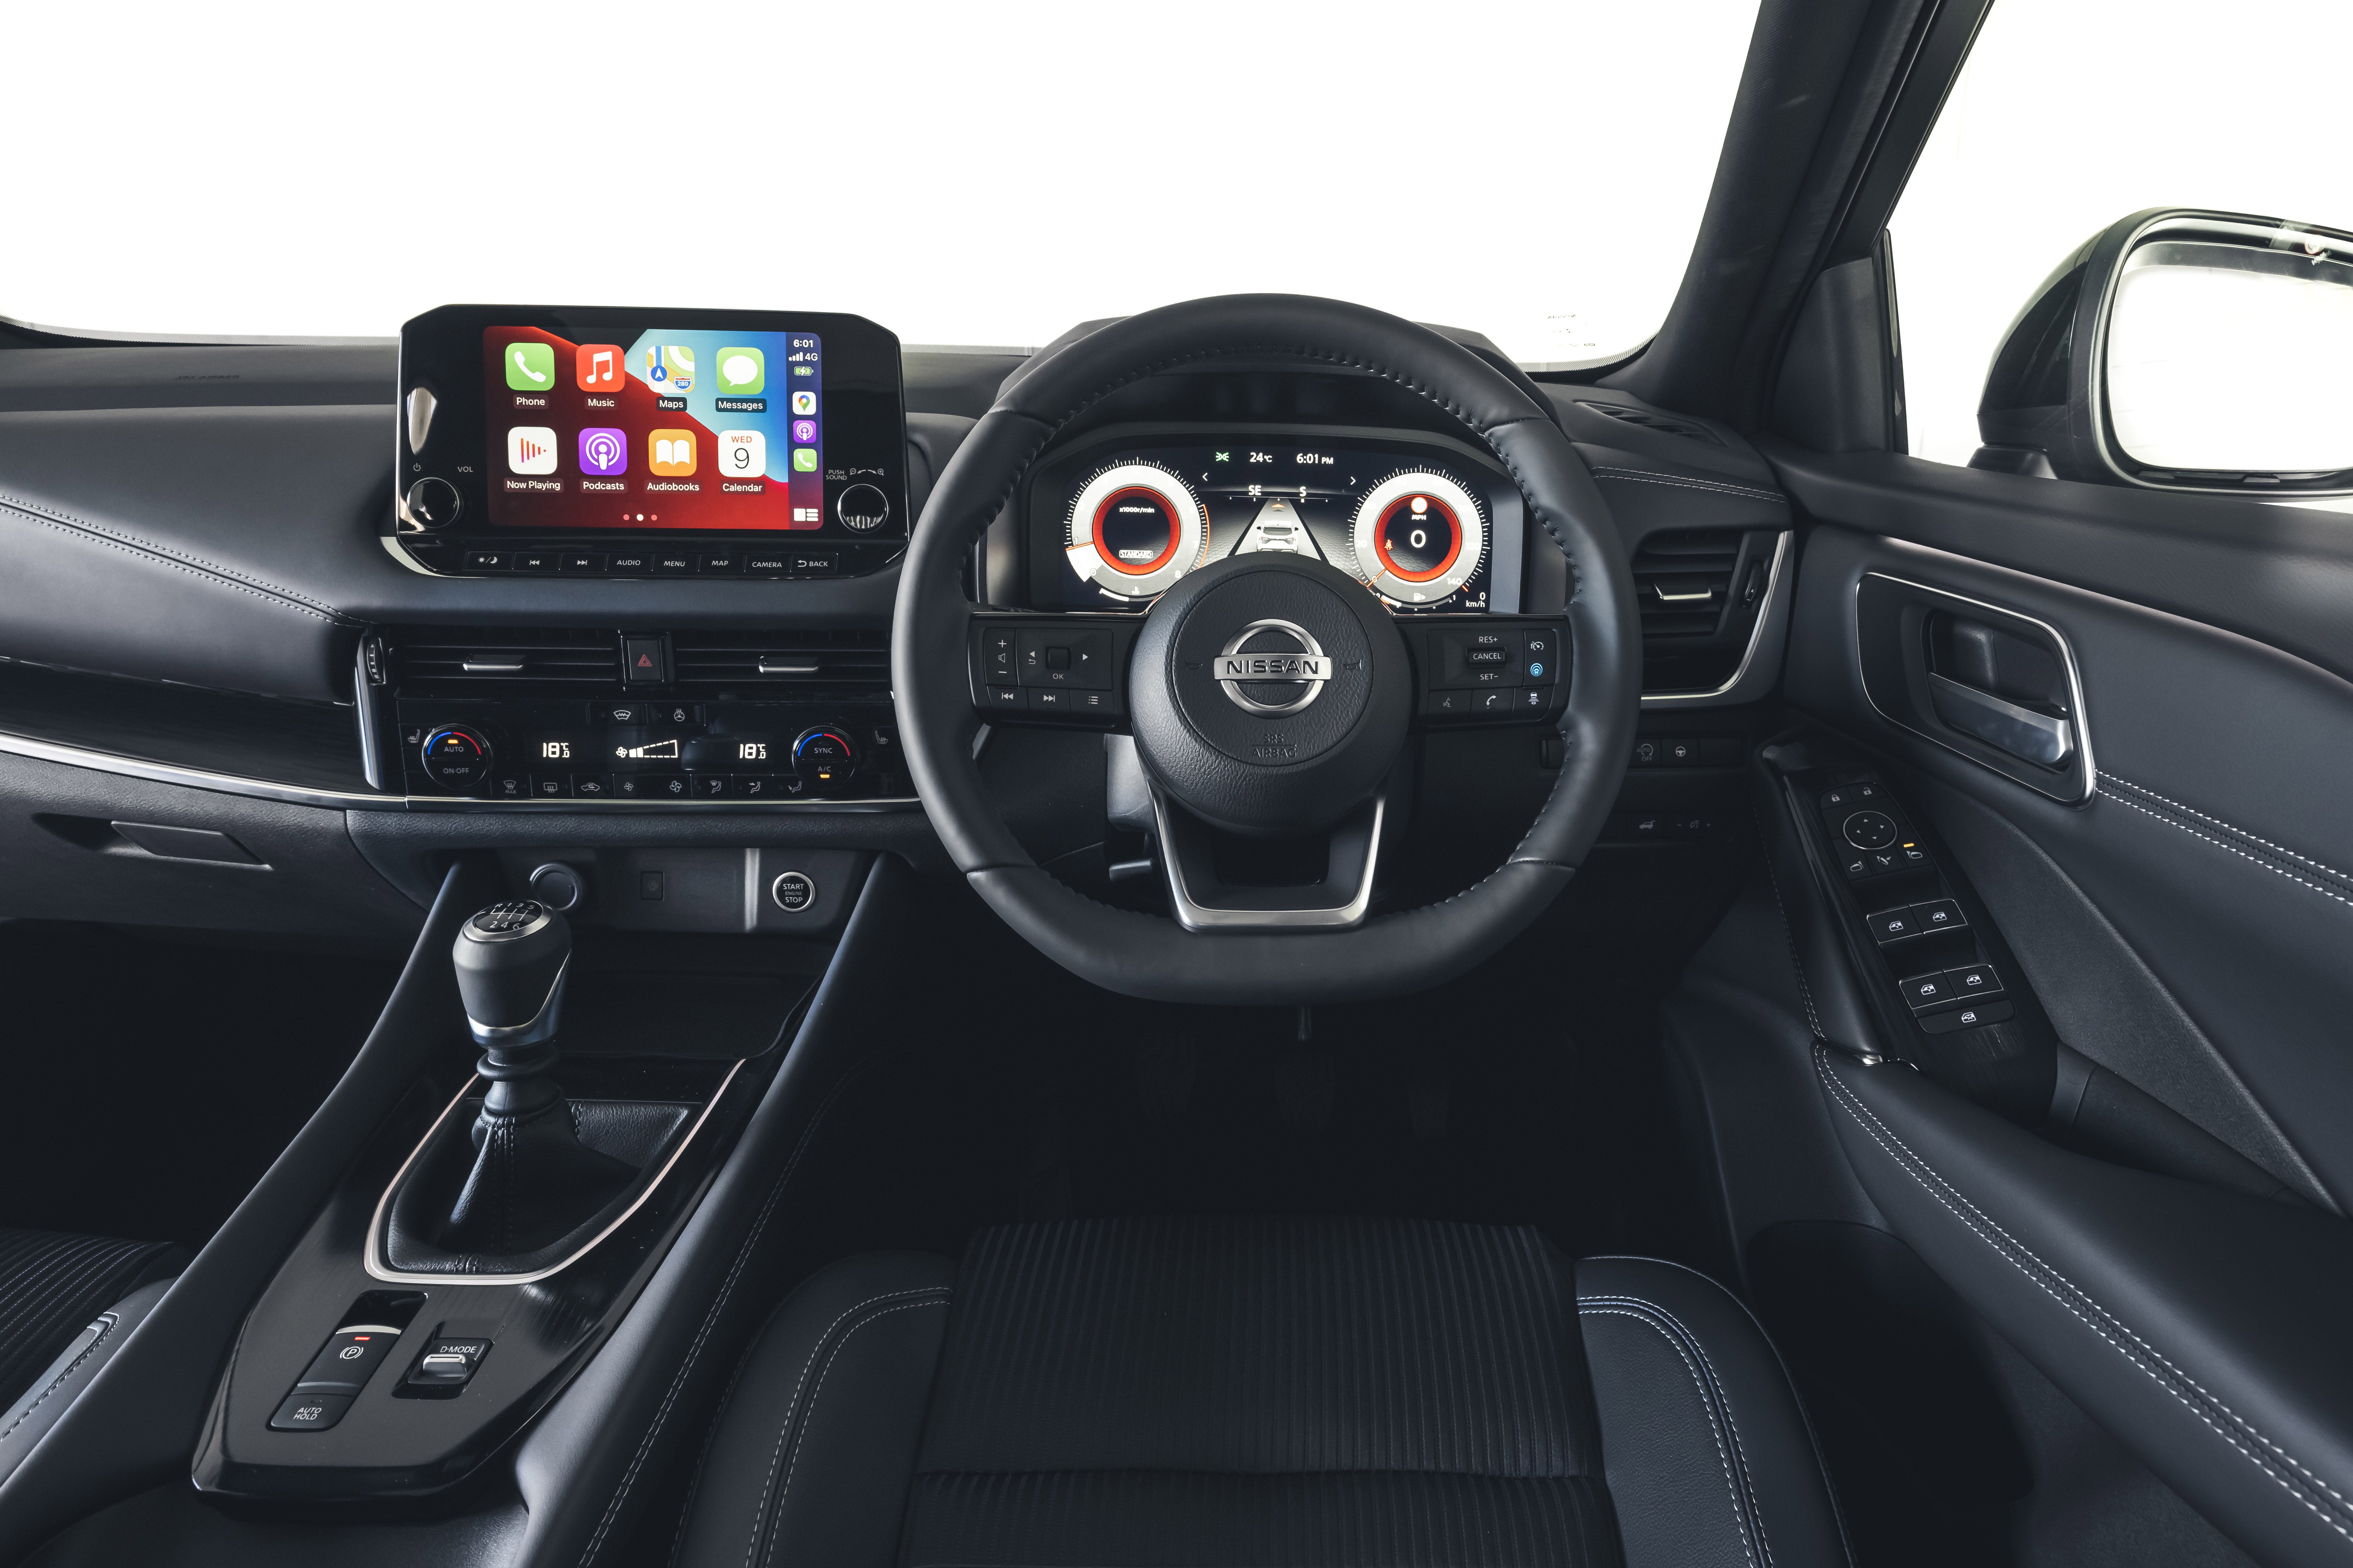 Nissan Qashqai Review 2022: interior photo of the Qashqai's dashboard and controls